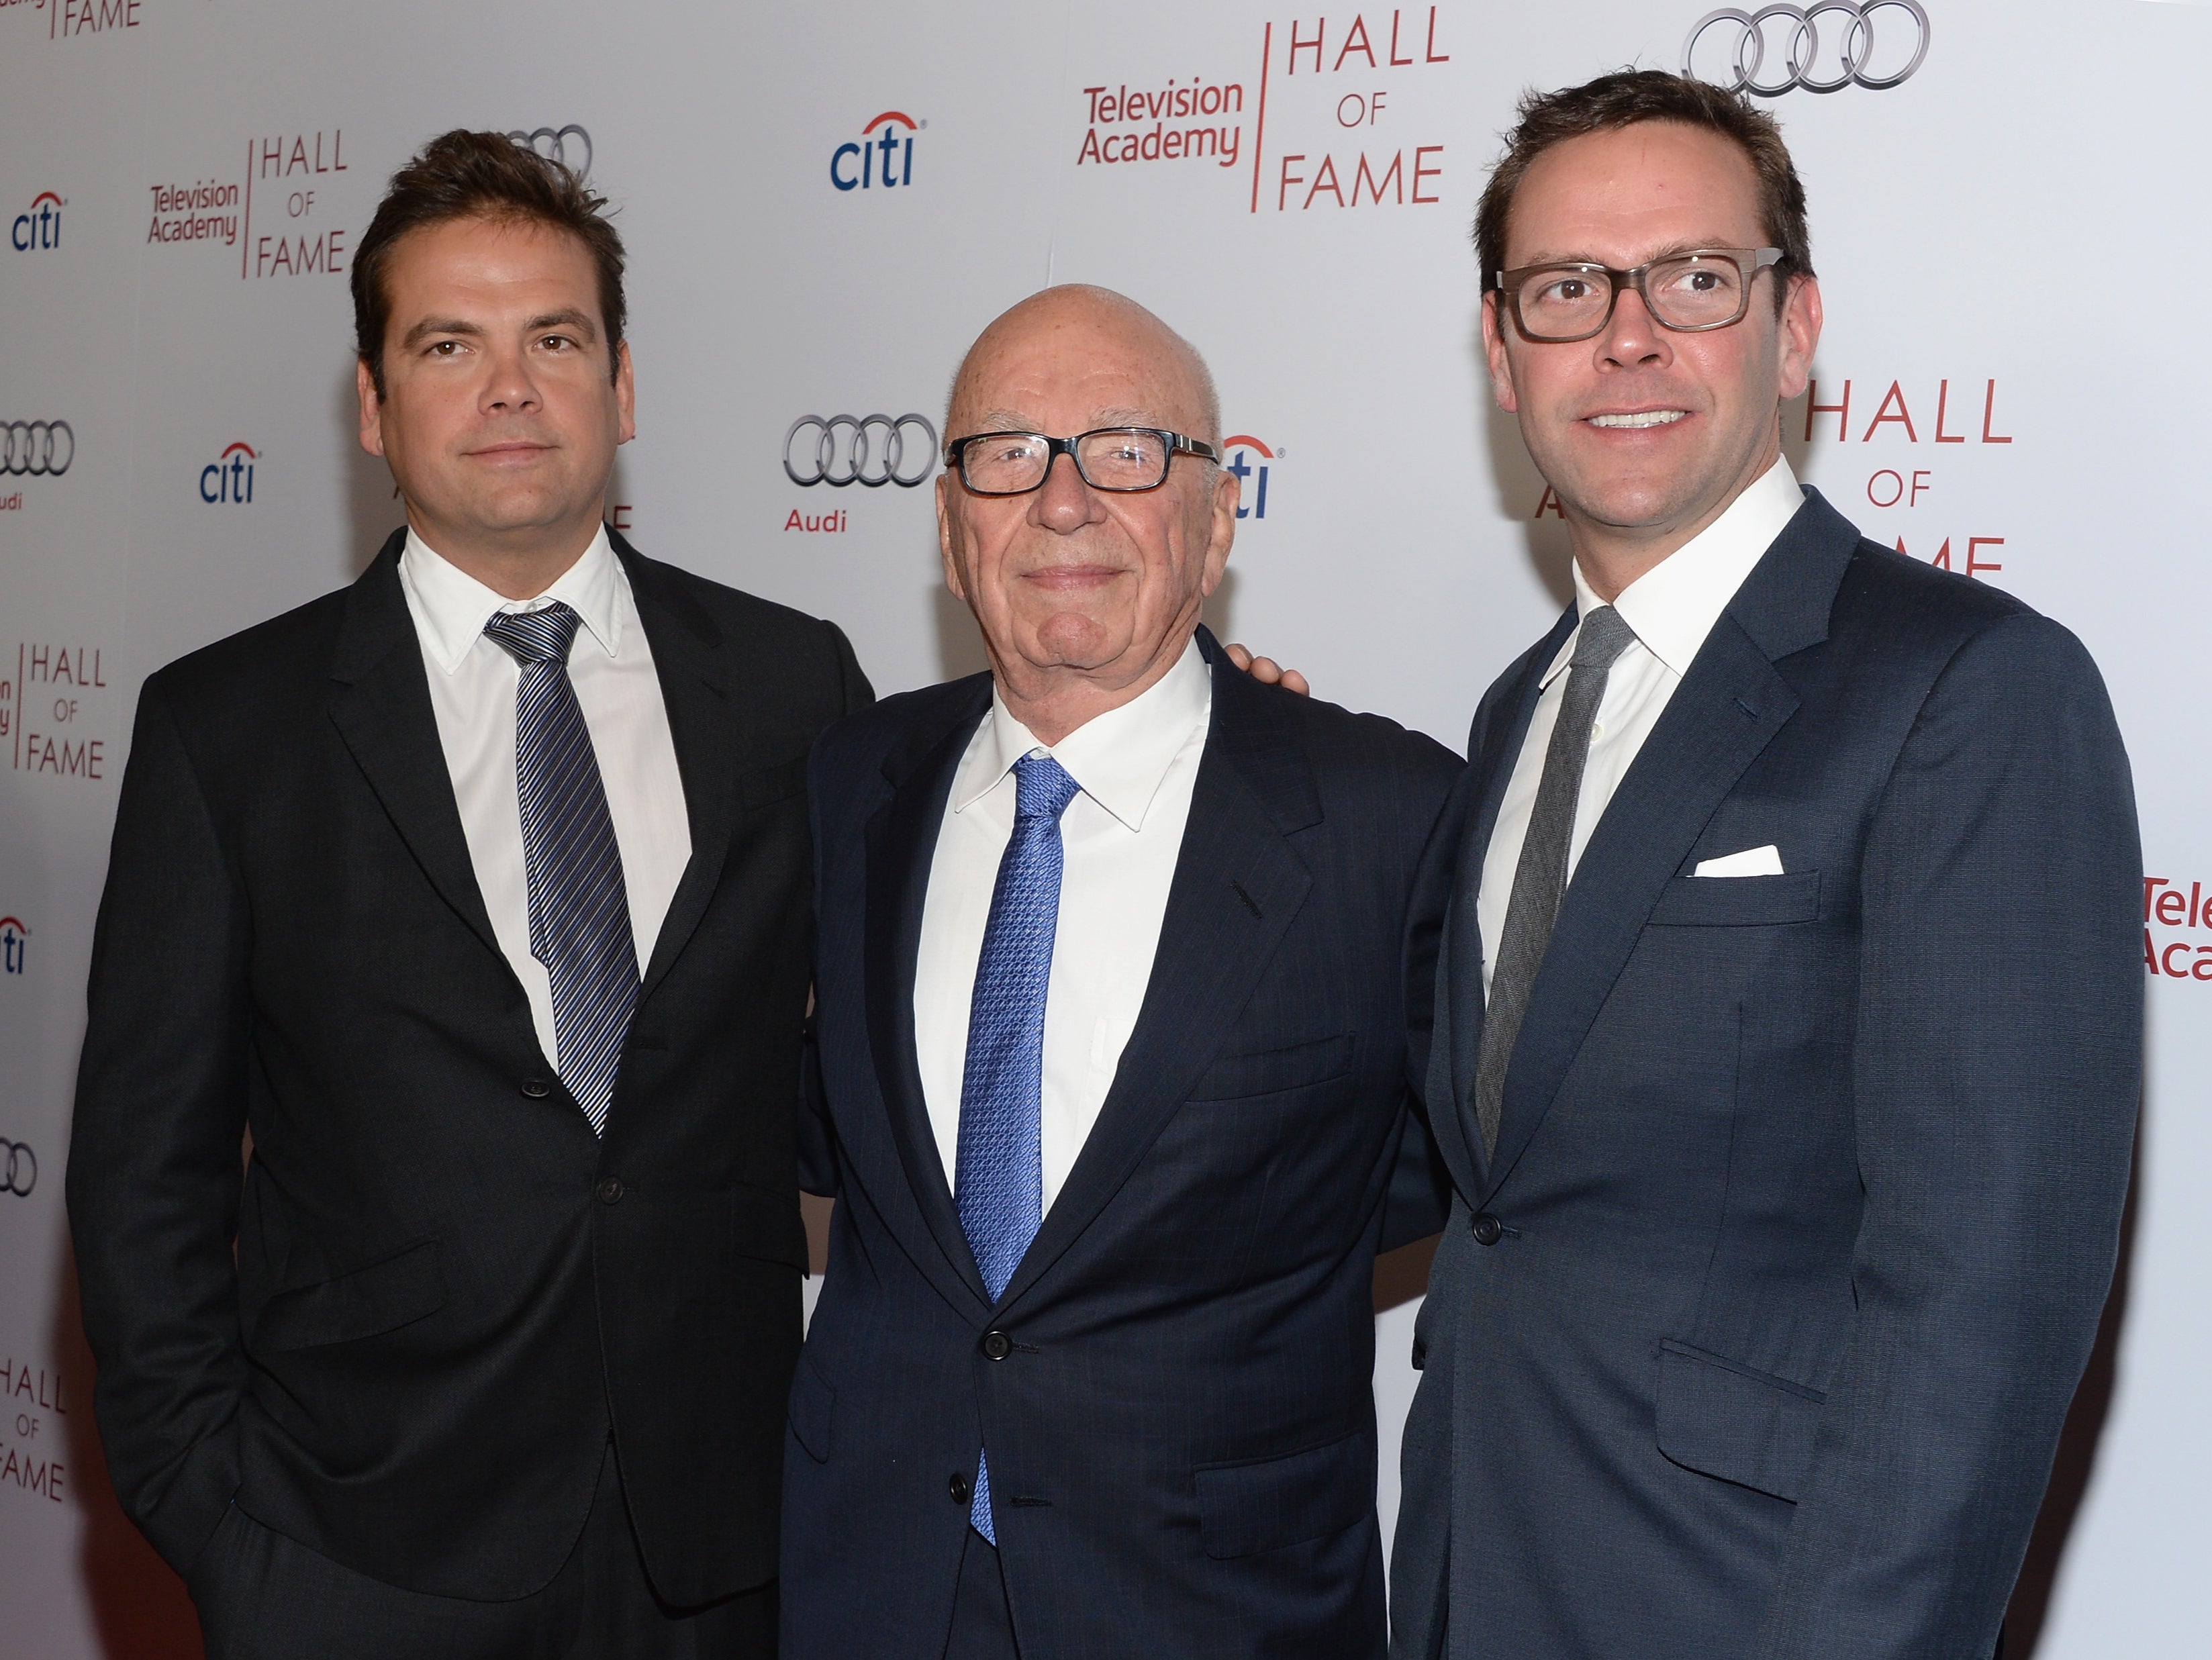 From left Lachlan Murdoch, Rupert Murdoch and James Murdoch in 2014